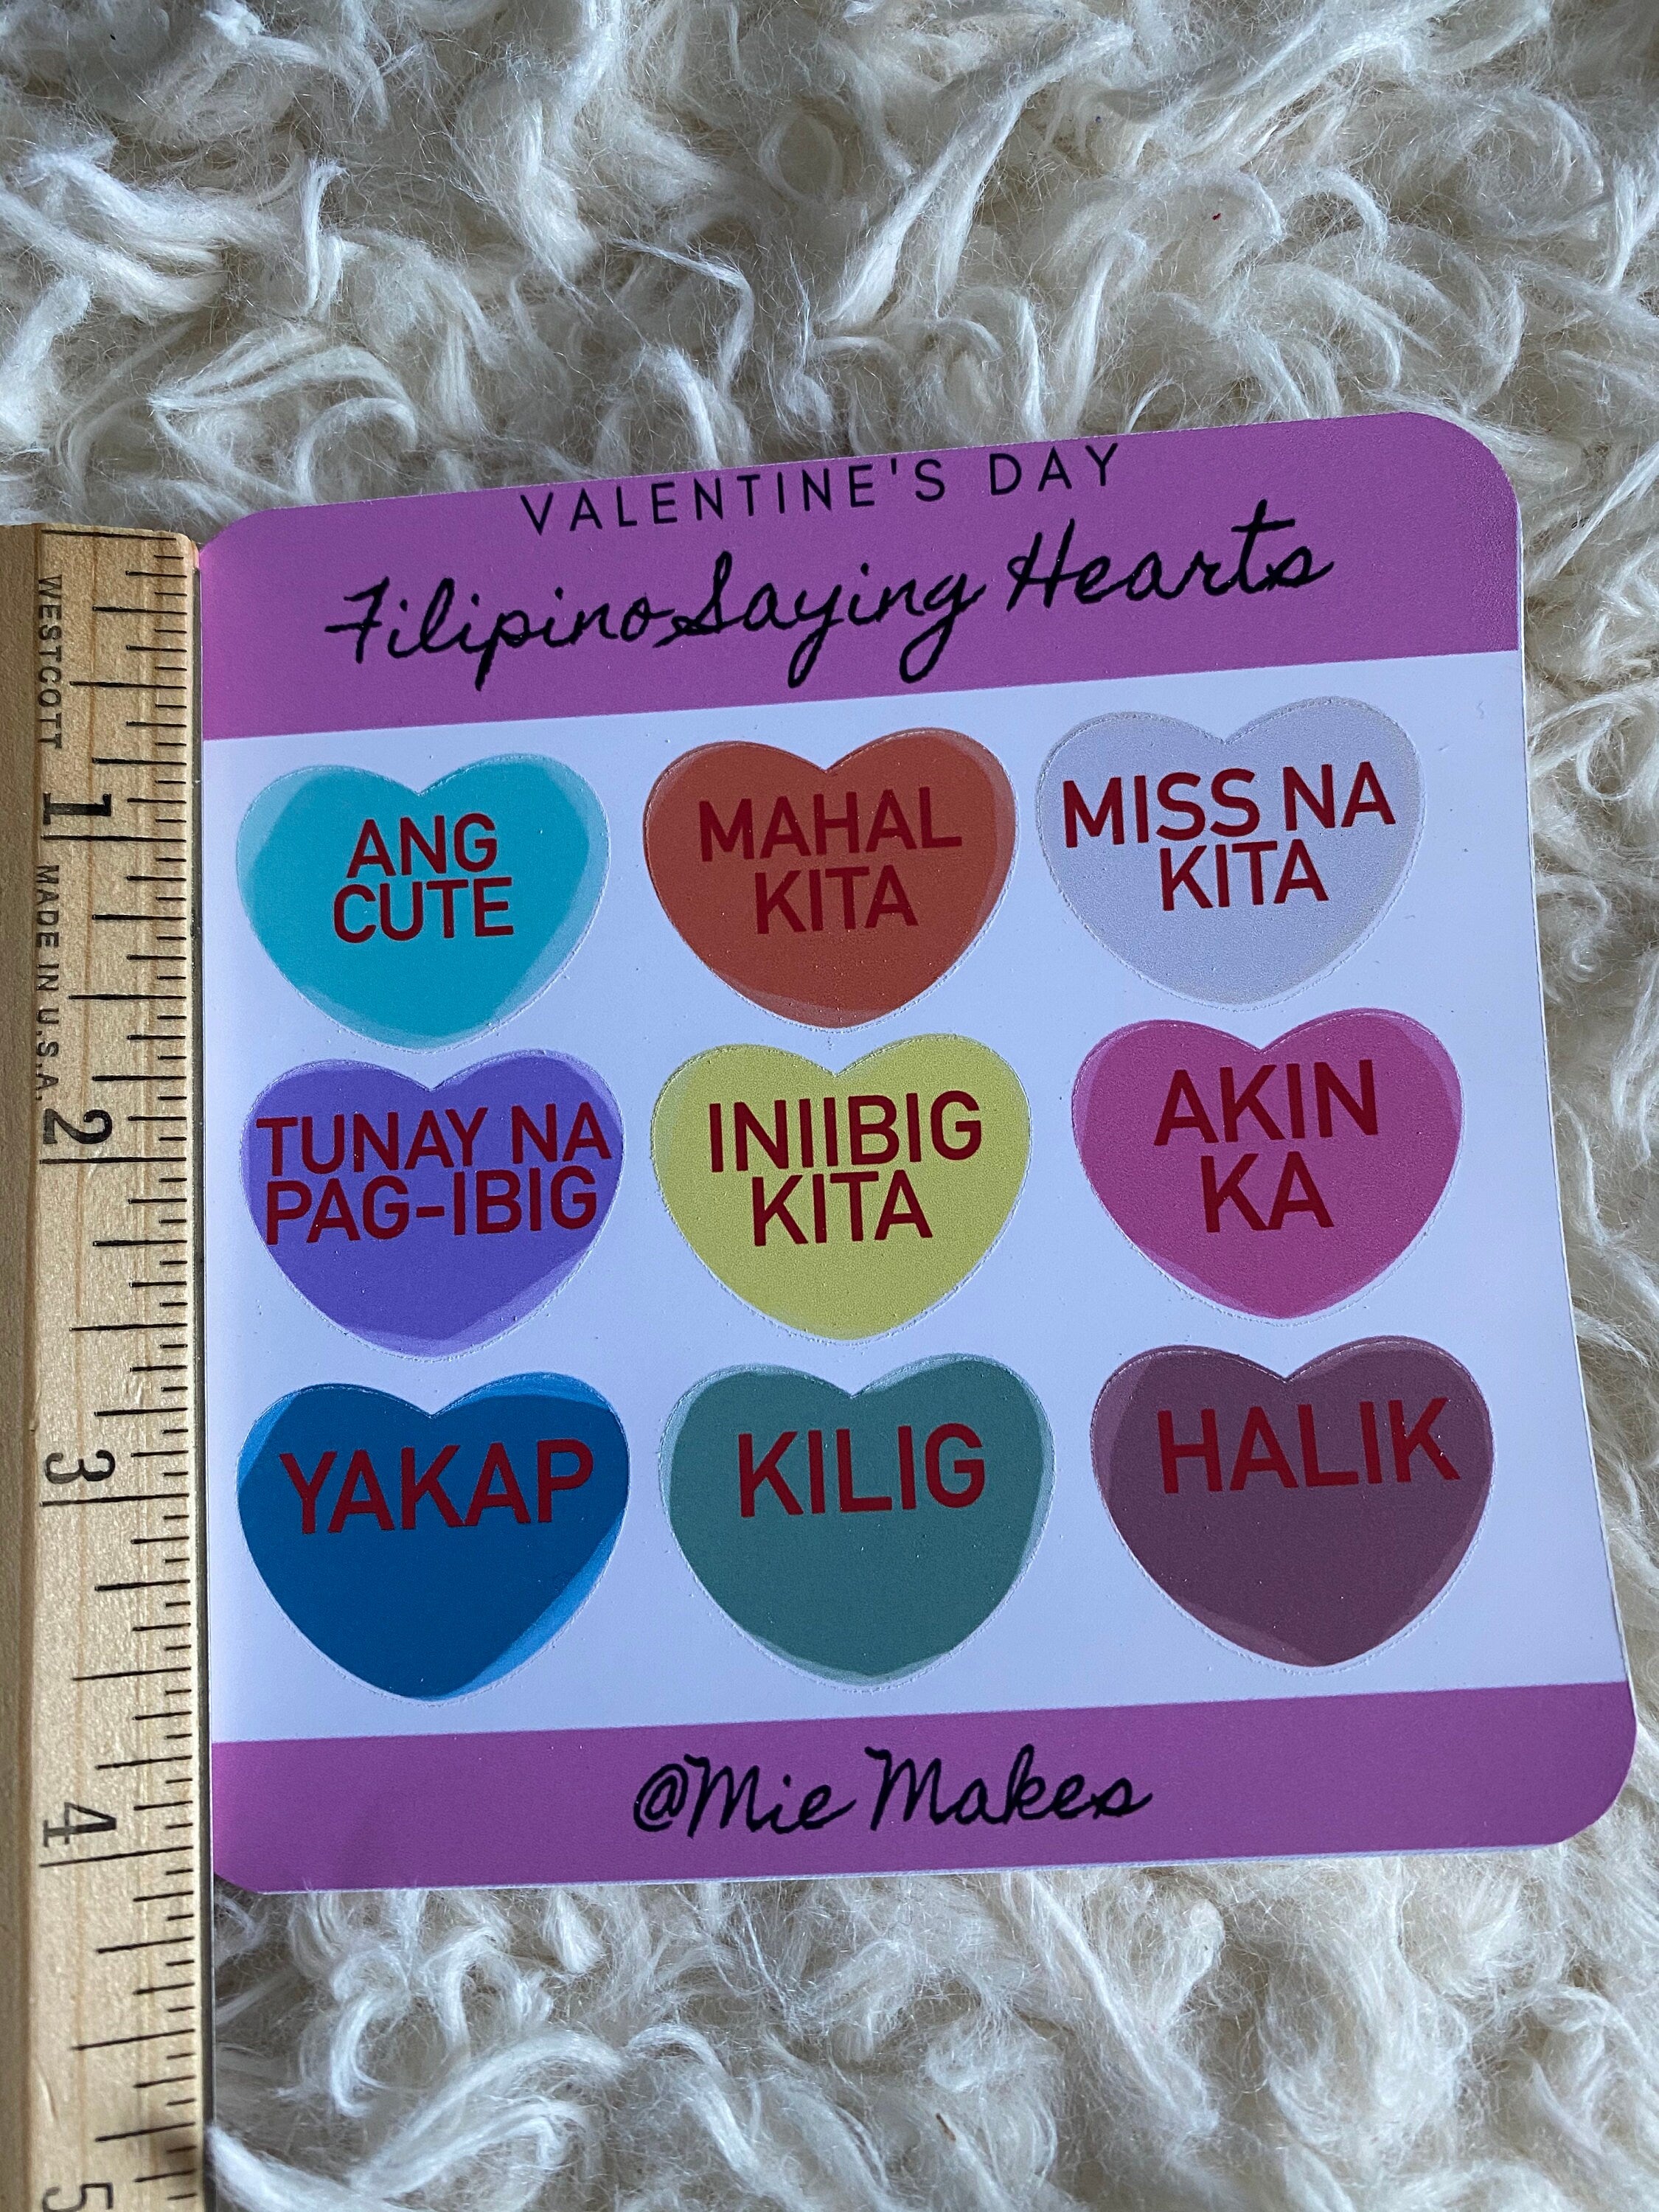 Mie Makes Valentine's Day Filipino Saying Heart Stickers, Conversation Hearts, Mahal, Filipino Sayings, Valentine's Stickers, Philippines, Filipina